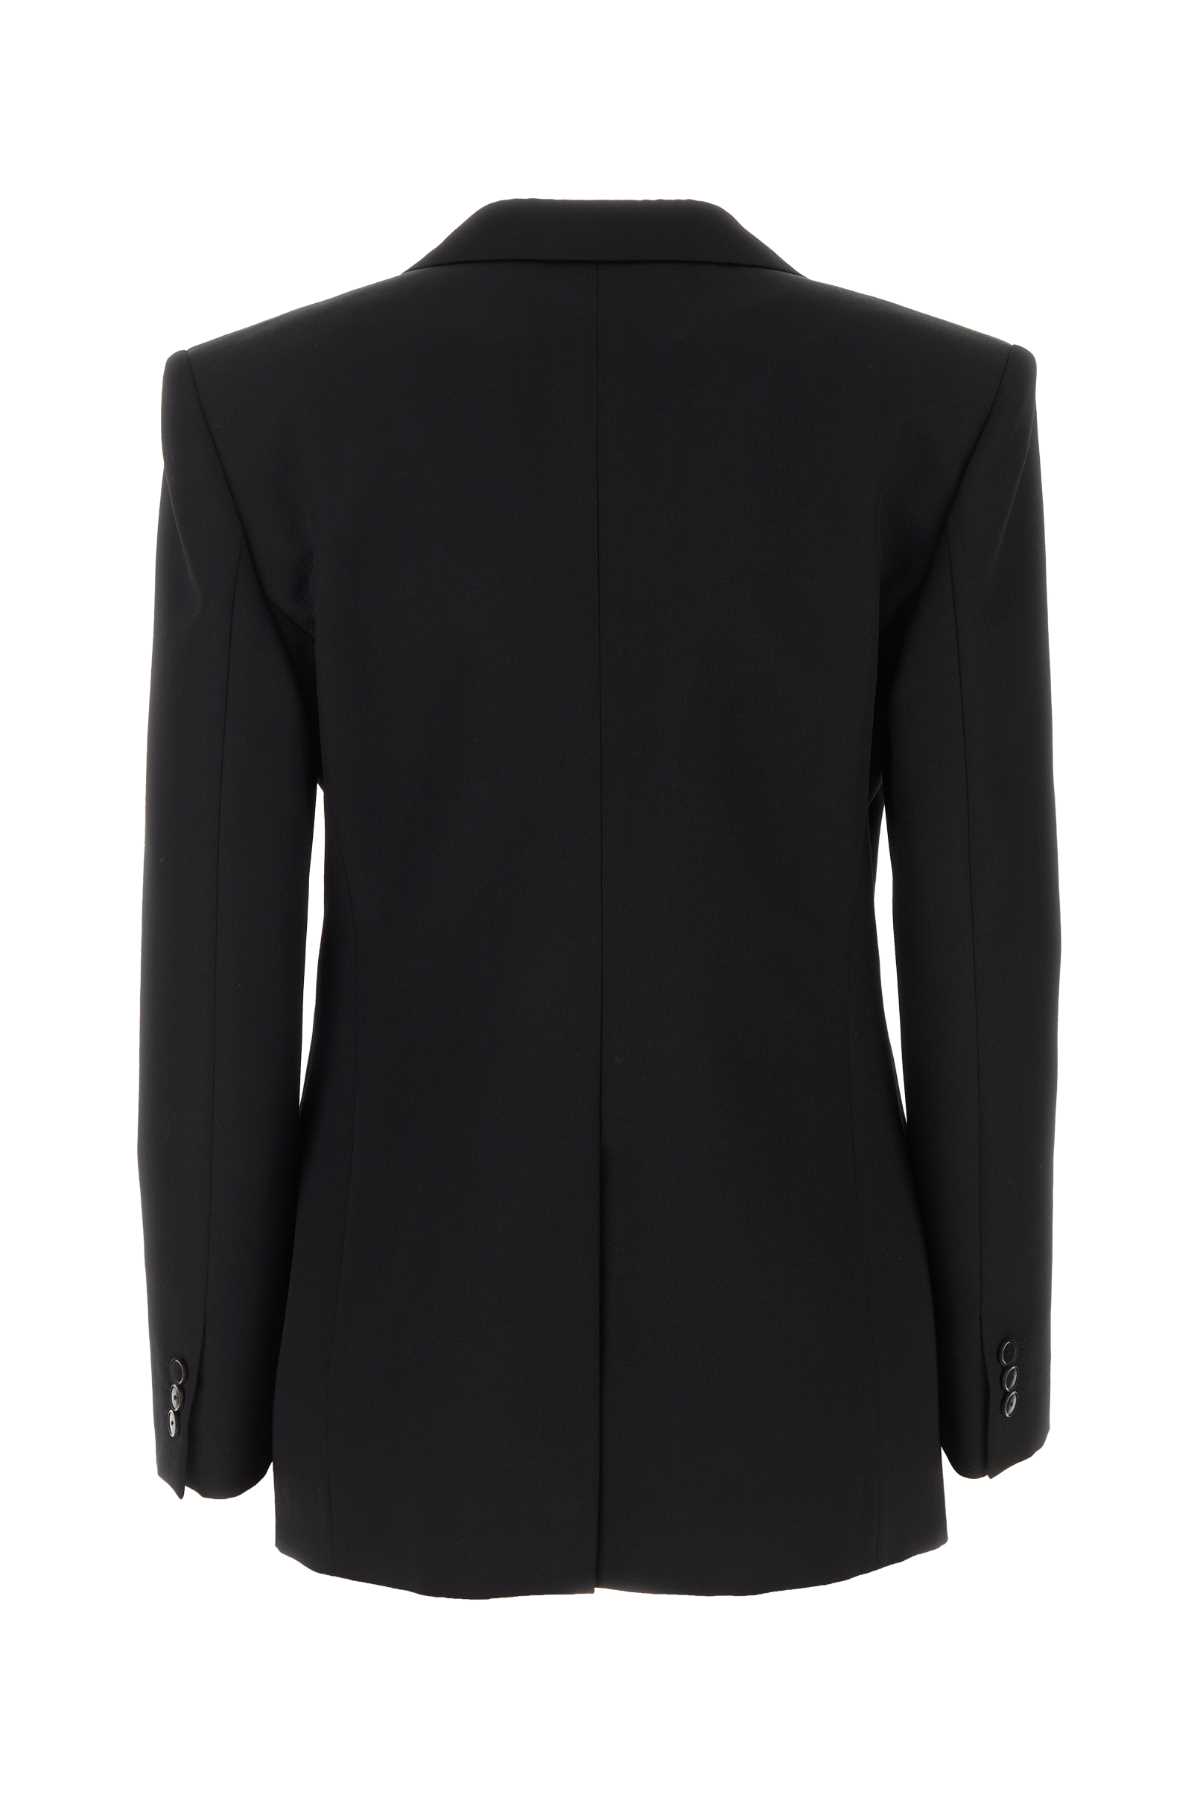 Givenchy Black Wool Blend Blazer